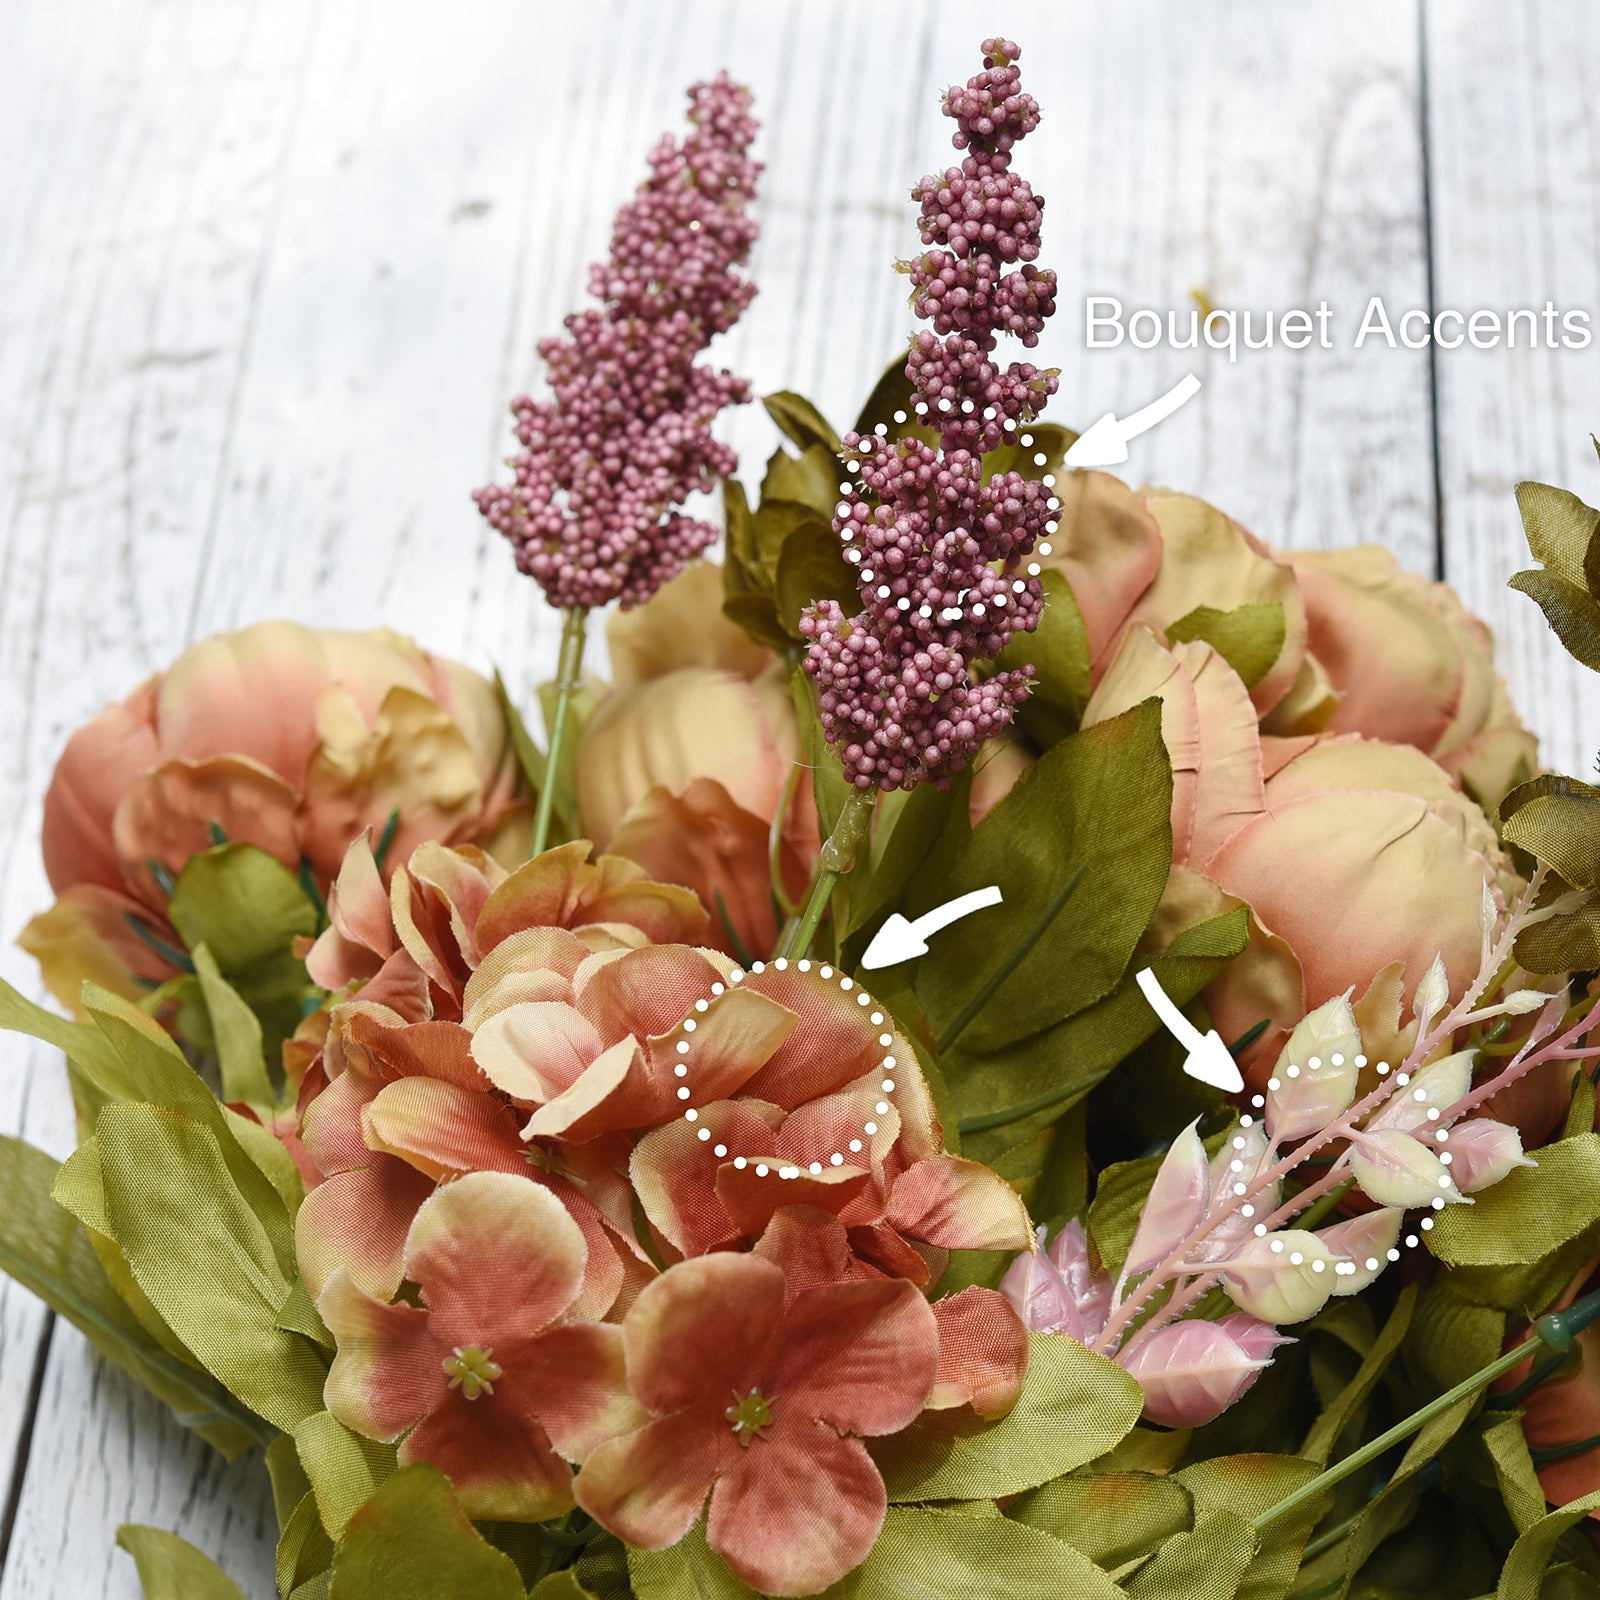 FiveSeasonStuff 2 Bundles Brown|Pink Peonies Artificial Flower Bouquet